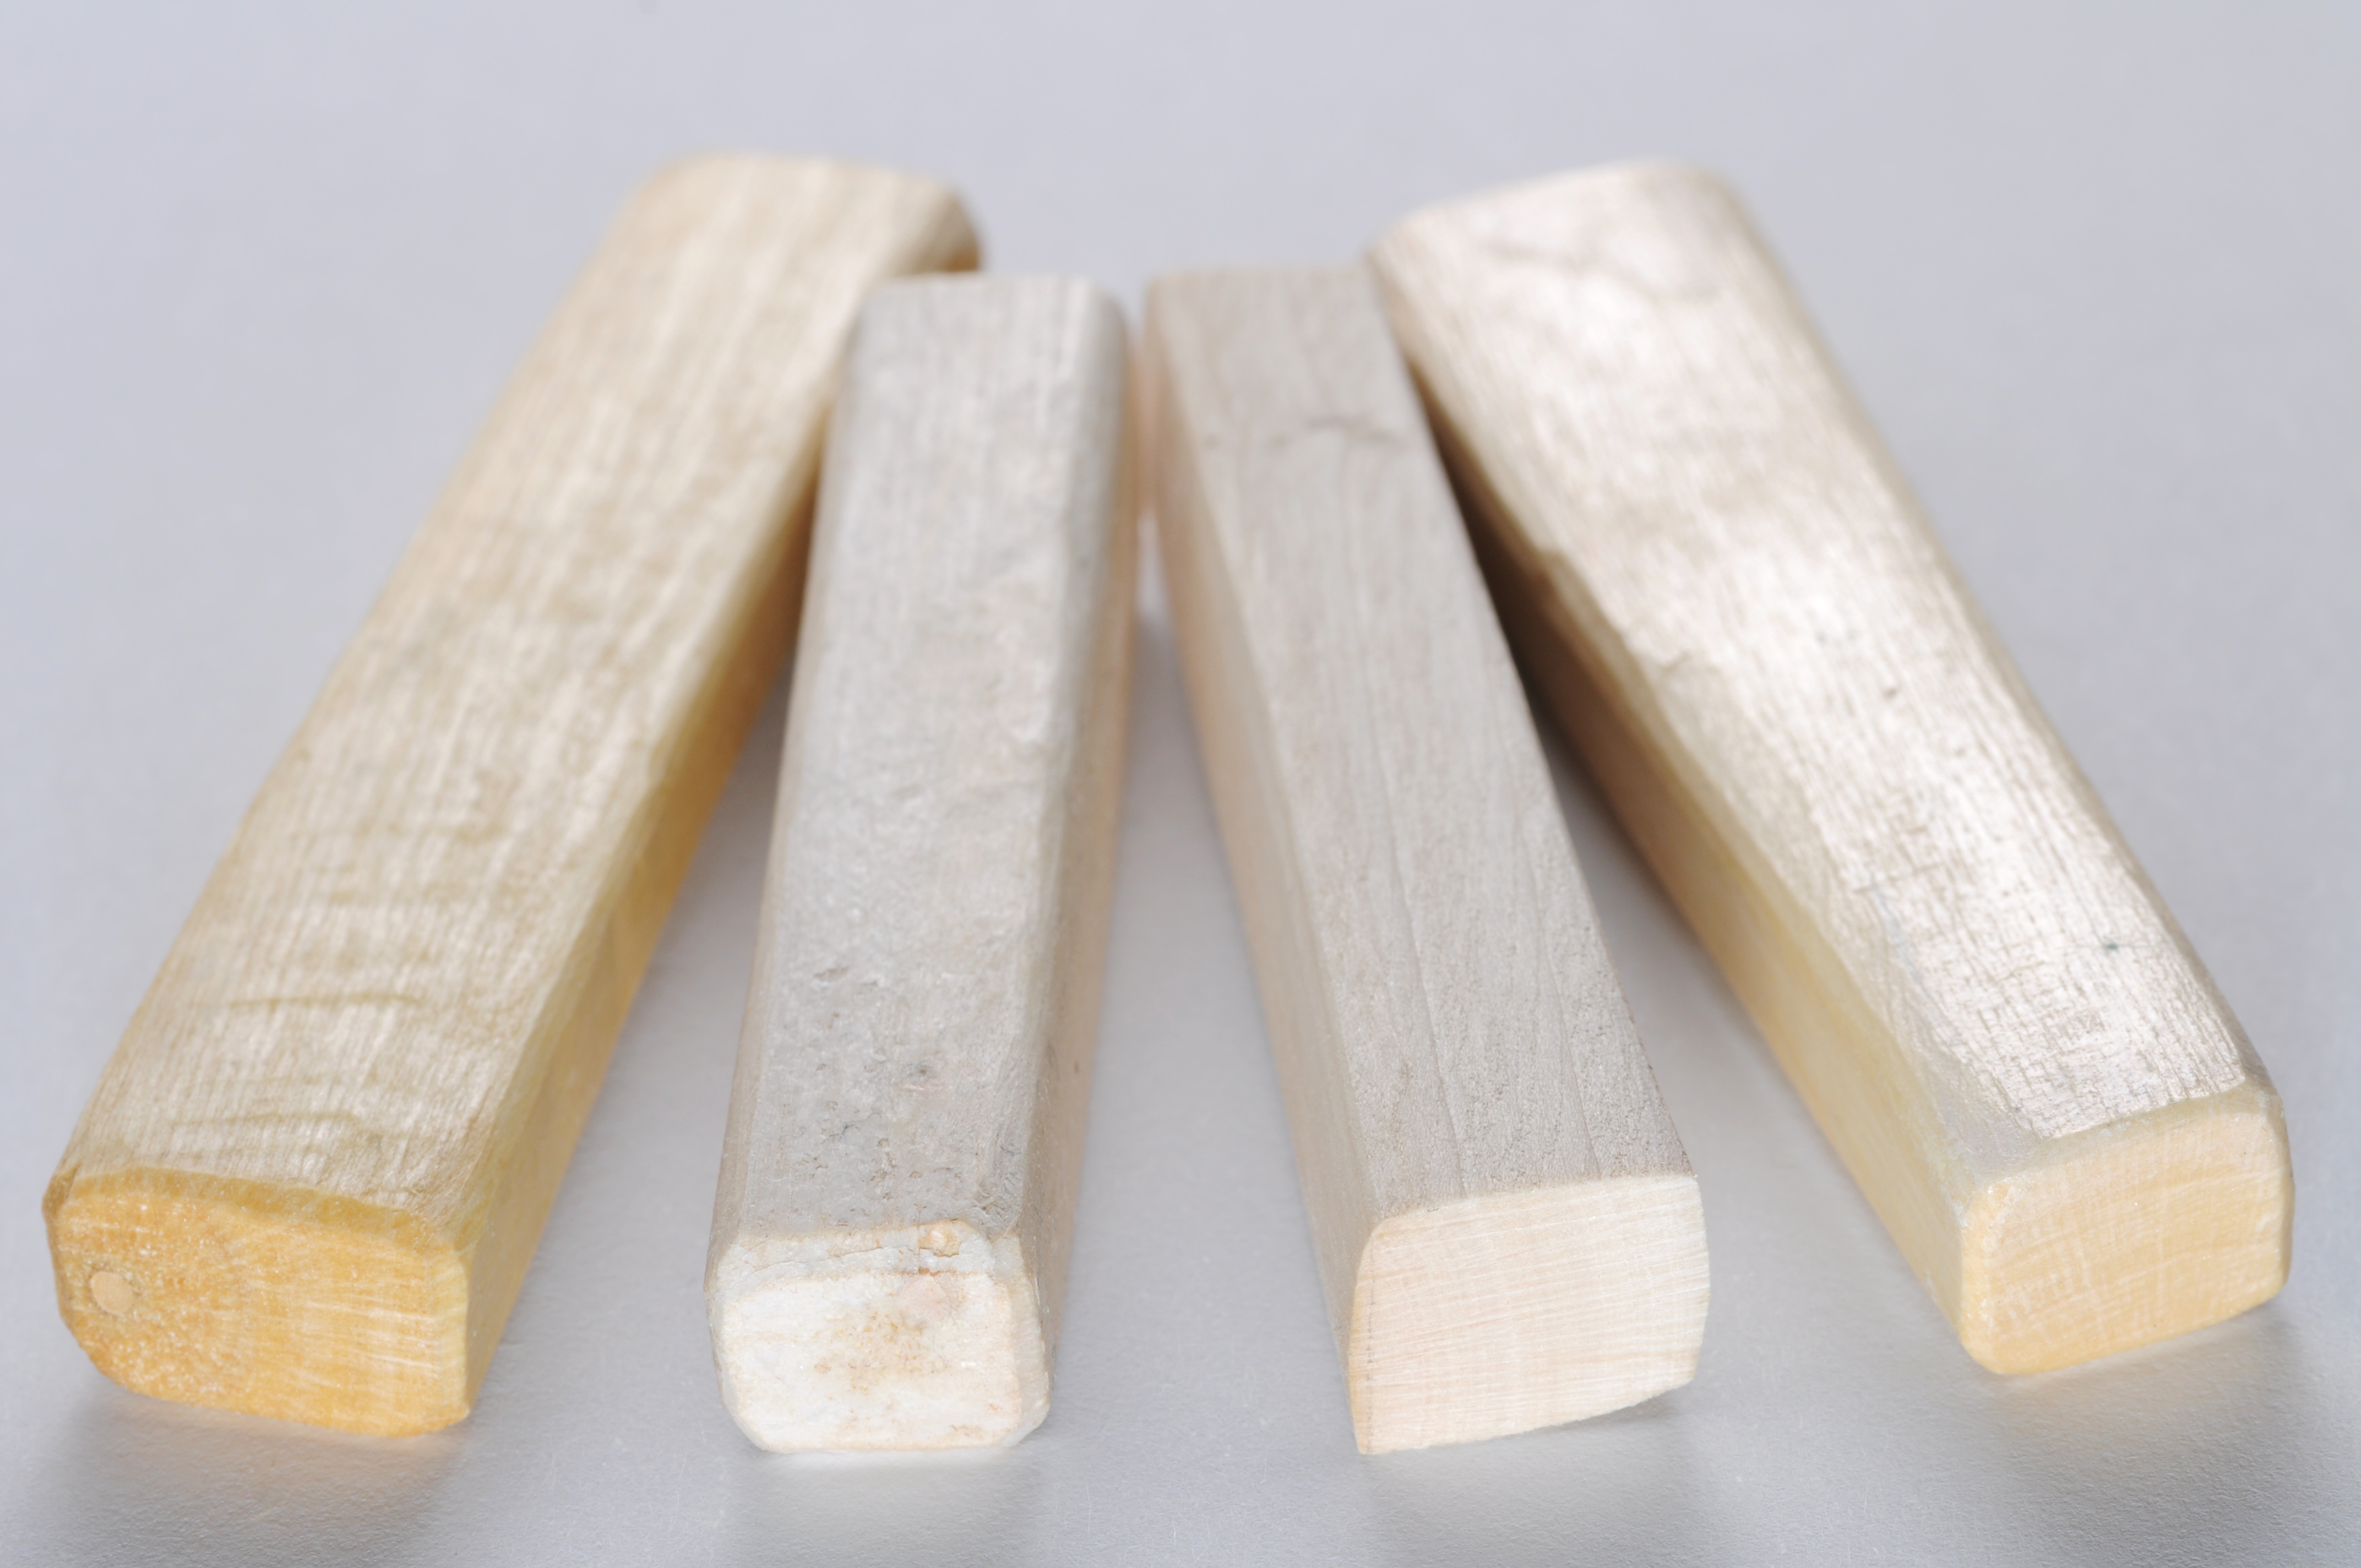 File:Wood surface coatings.jpeg - Wikimedia Commons